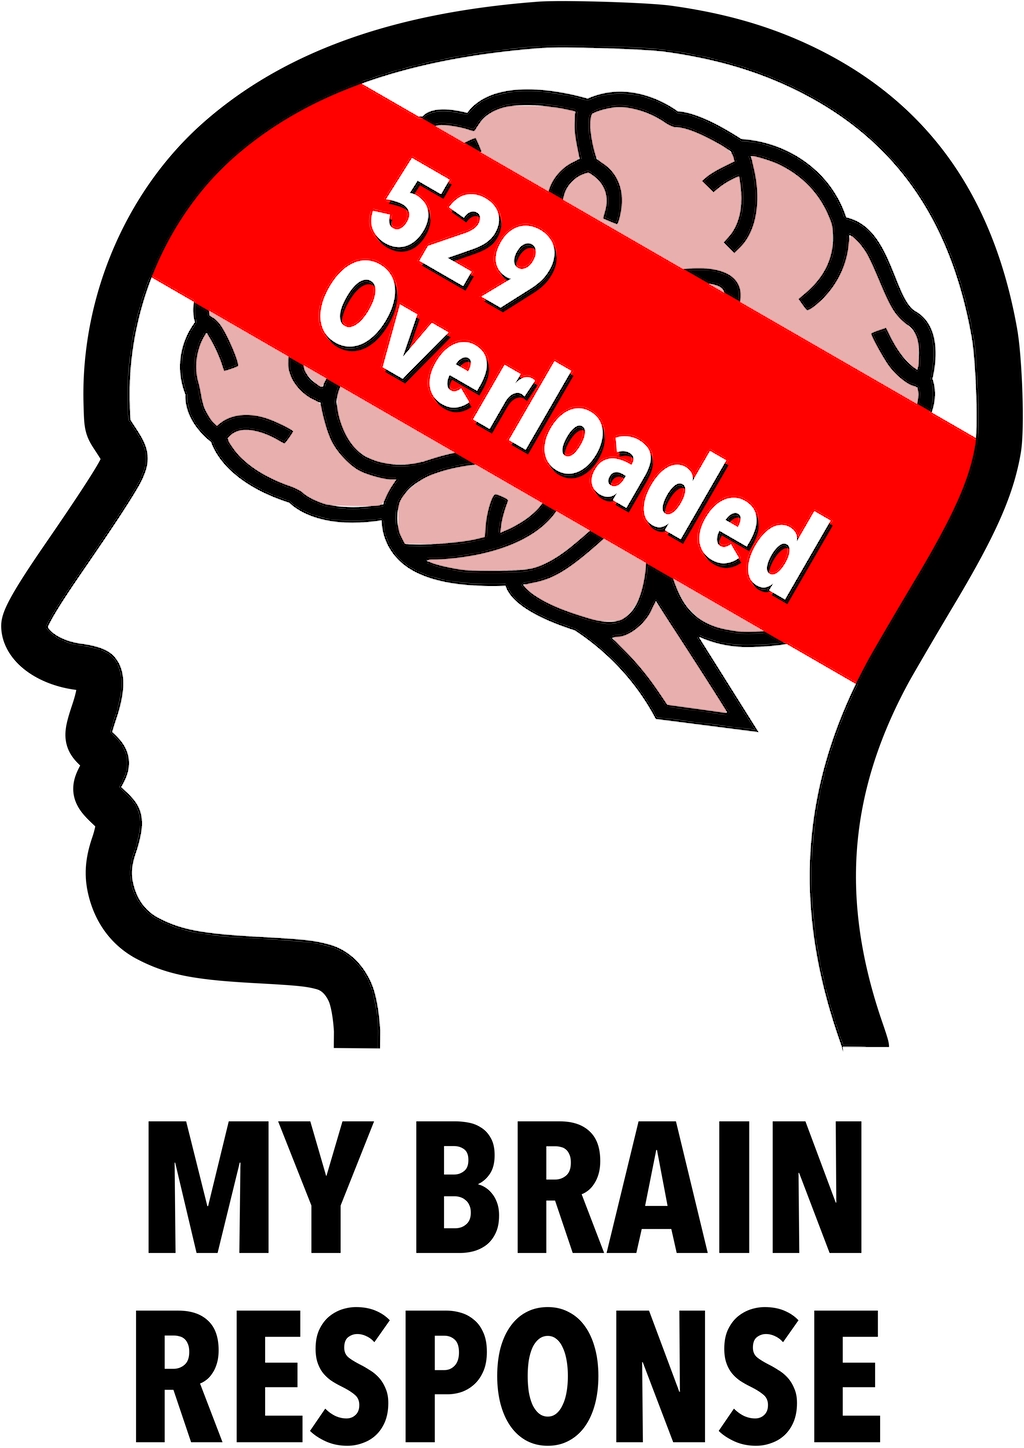 My Brain Response: 529 Overloaded